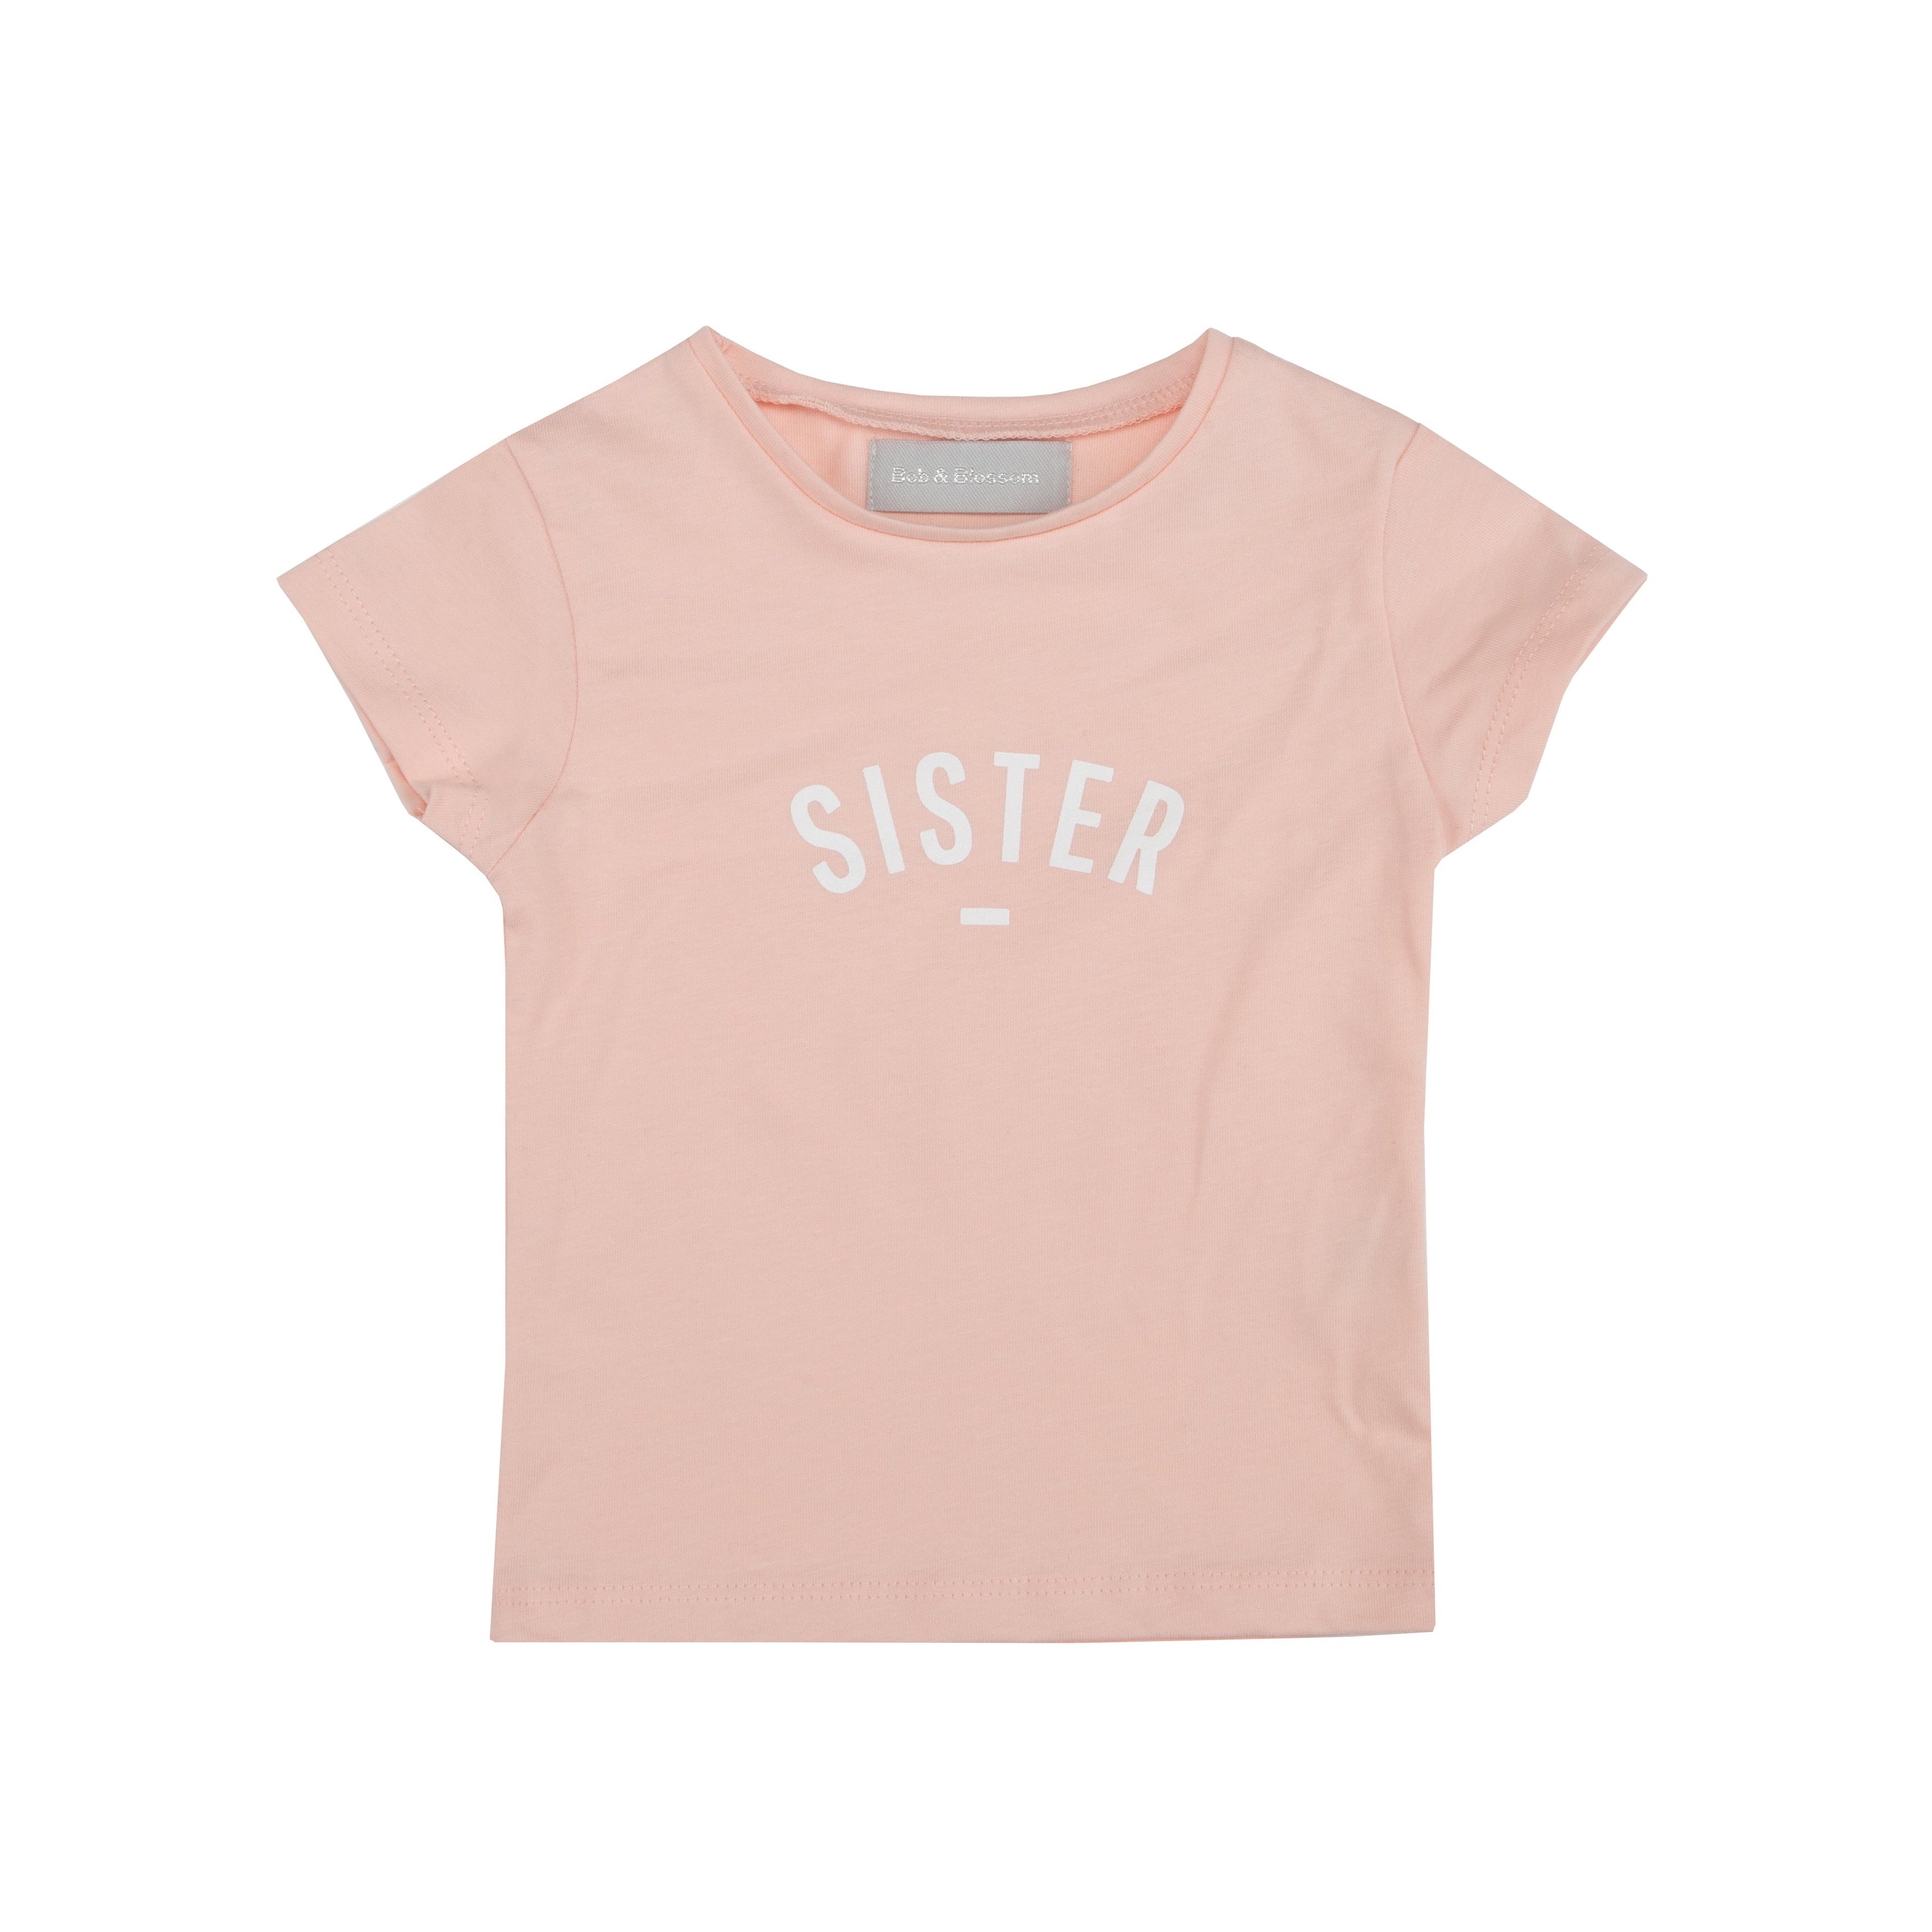 'Sister' Cap Sleeved T-Shirt